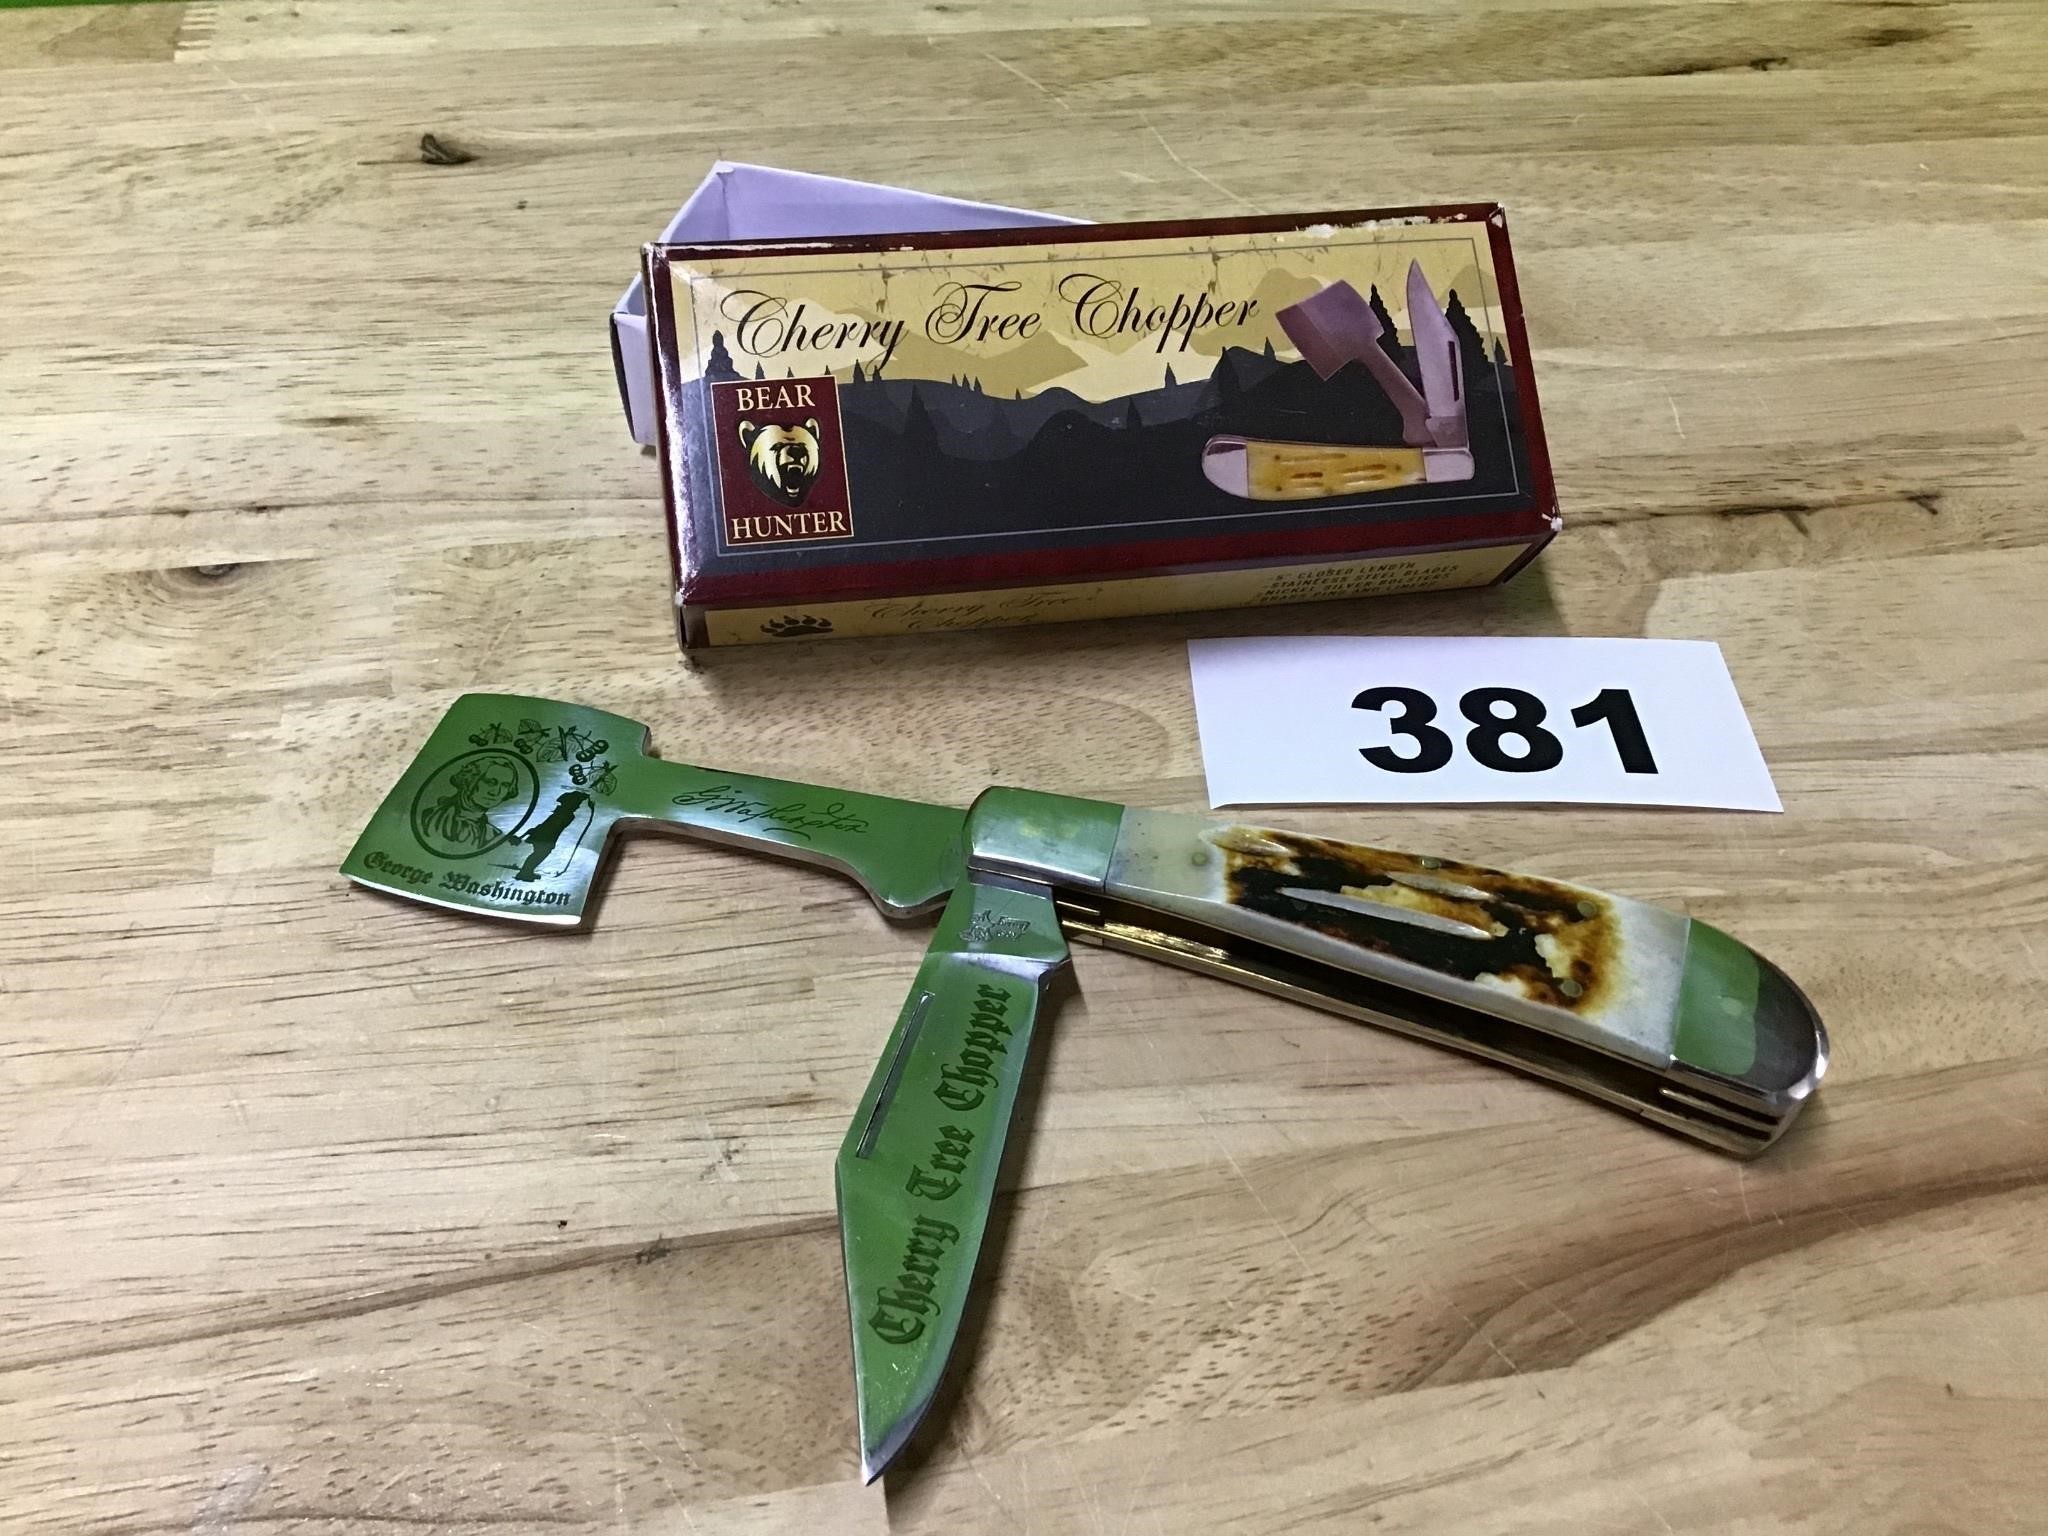 Bear Hunter Cherry Tree Chopper Knife